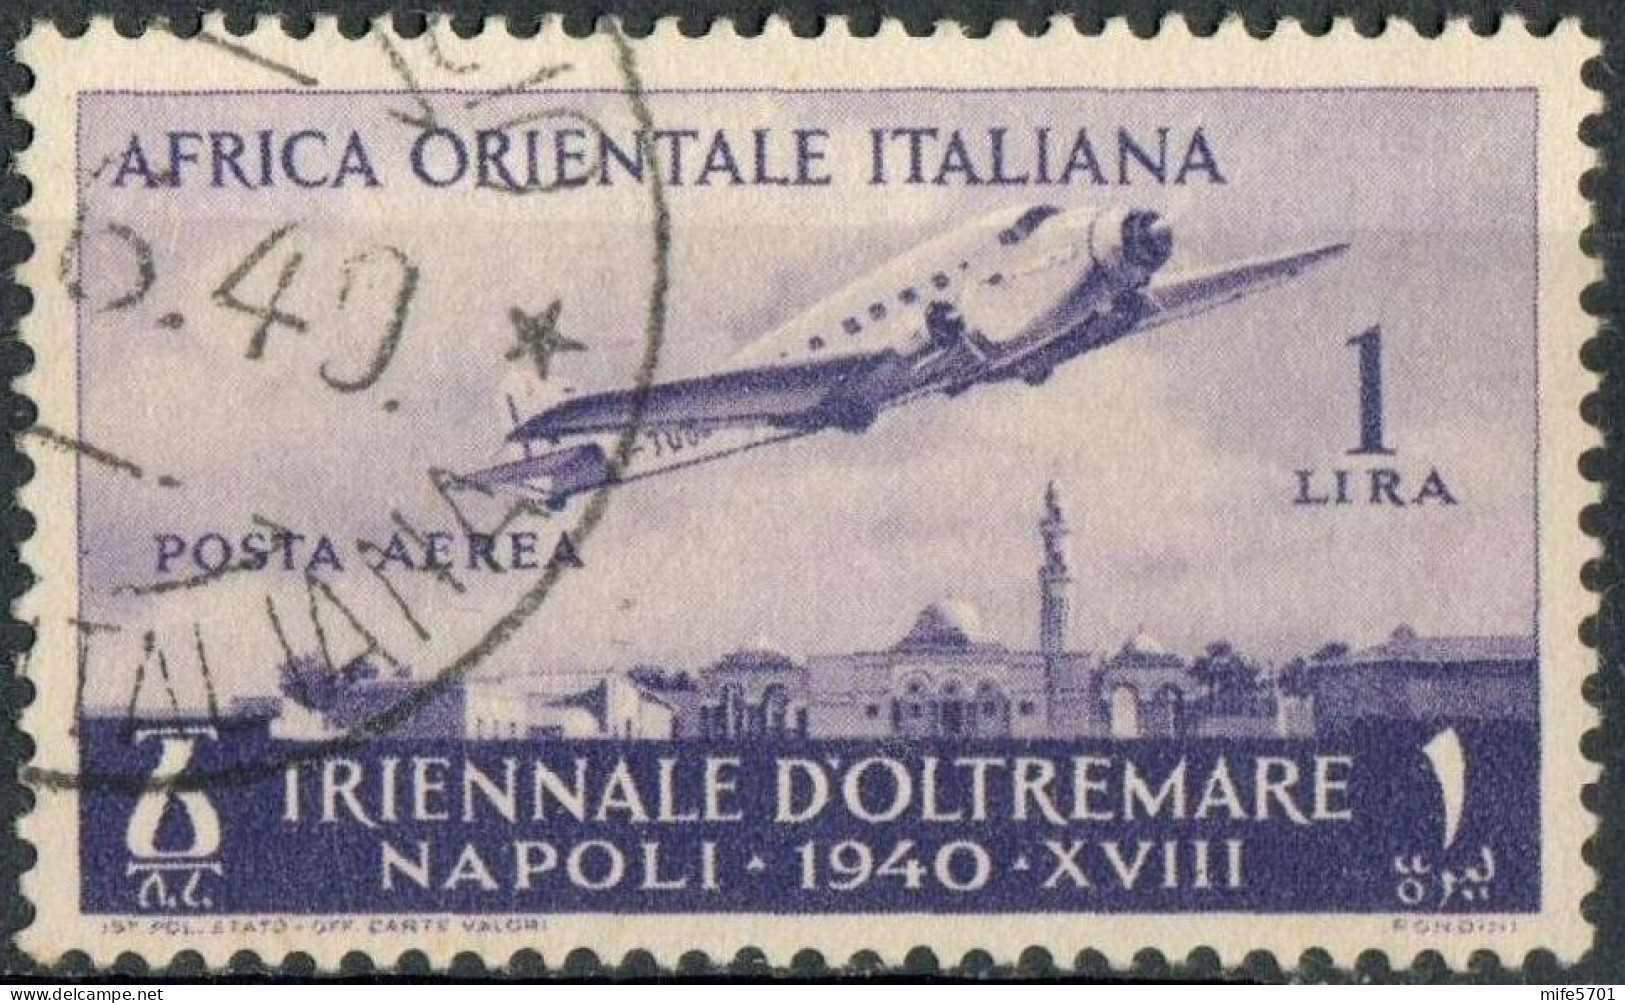 REGNO AFRICA ORIENTALE ITALIANA 1940 A.O.I. SERIE 1ª MOSTRA TRIENNALE D'OLTREMARE L. 1 POSTA AEREA USATO SASSONE A17 - Italian Eastern Africa